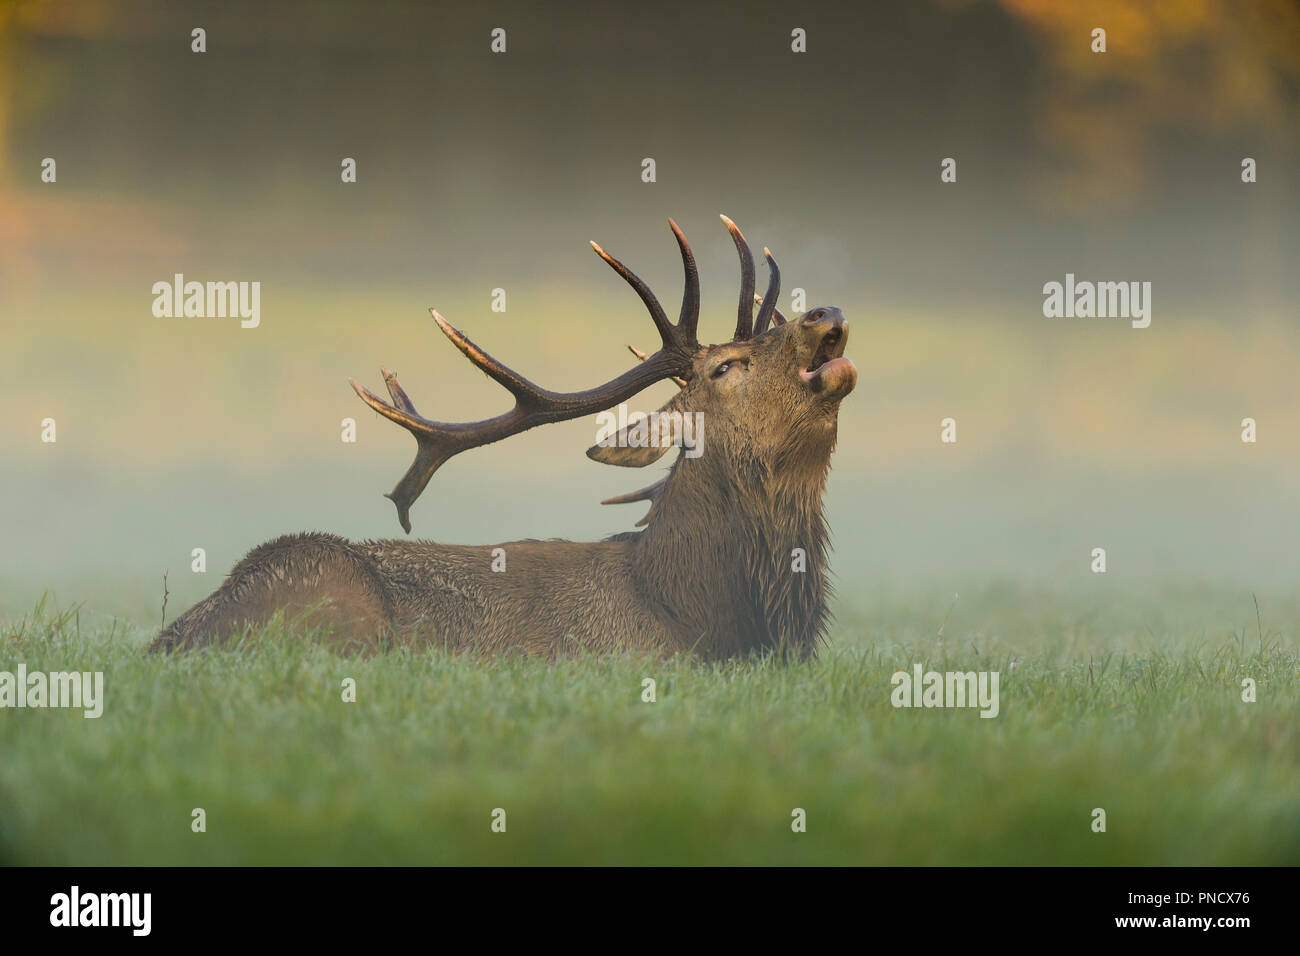 Red deer, Cervus elaphus, Male Roaring, in Rutting Season with Morning Mist, Europe Stock Photo